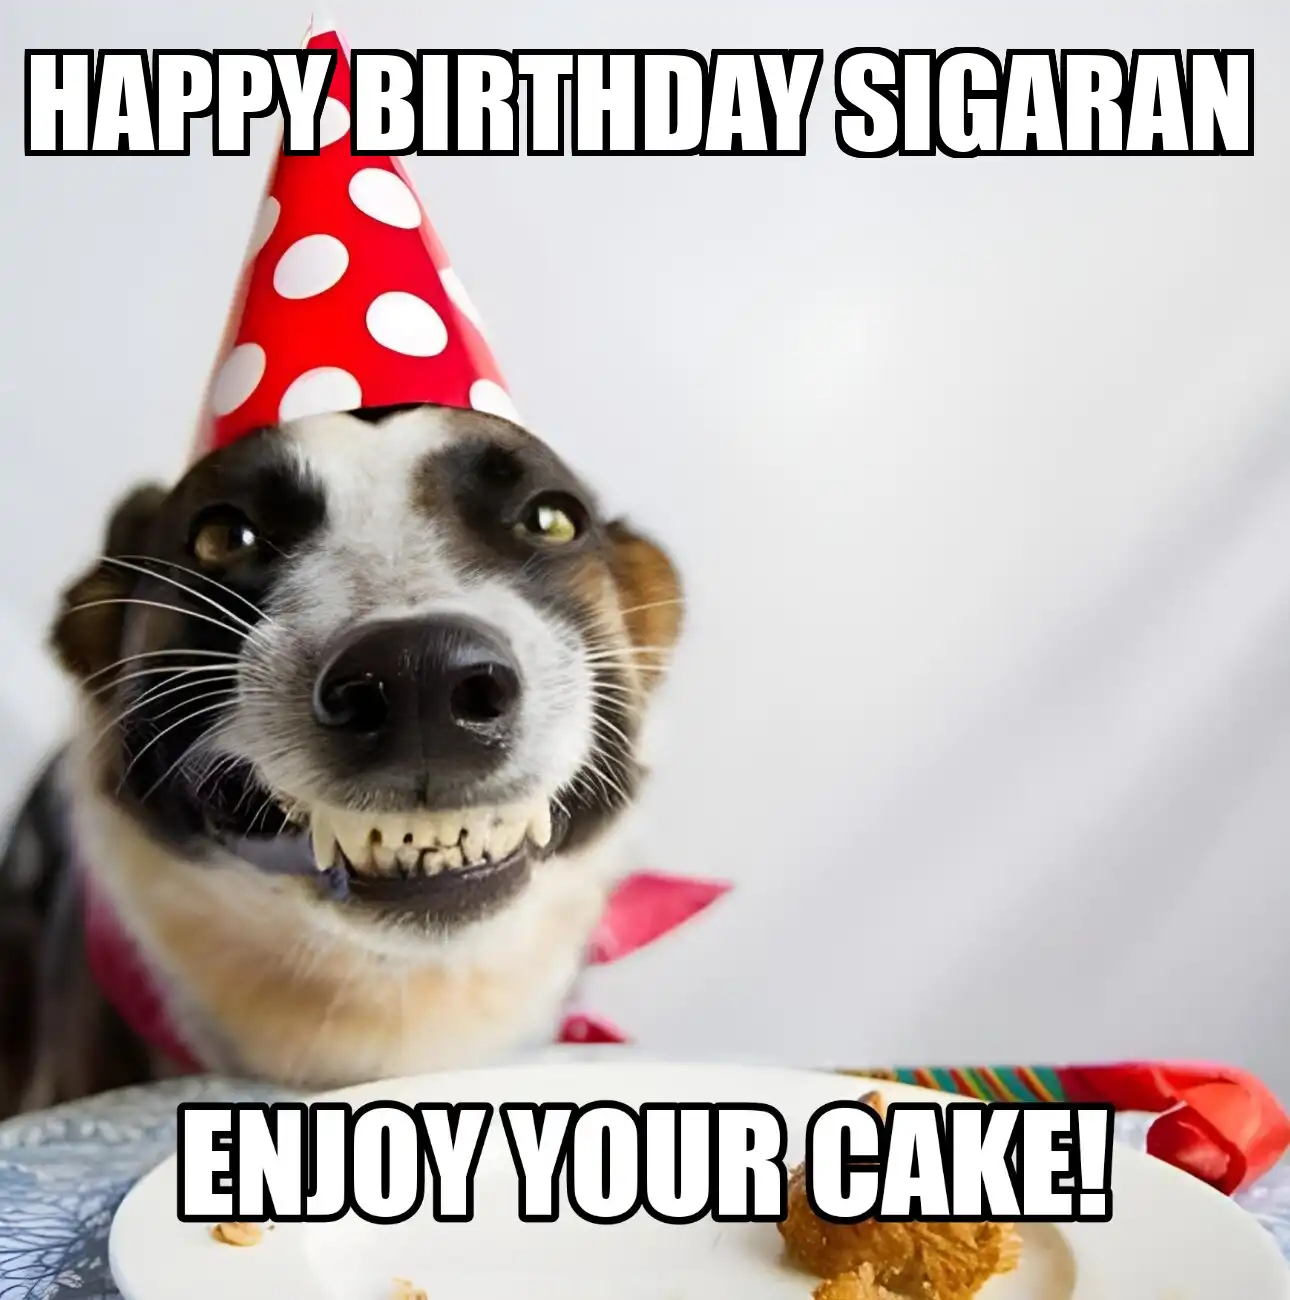 Happy Birthday Sigaran Enjoy Your Cake Dog Meme